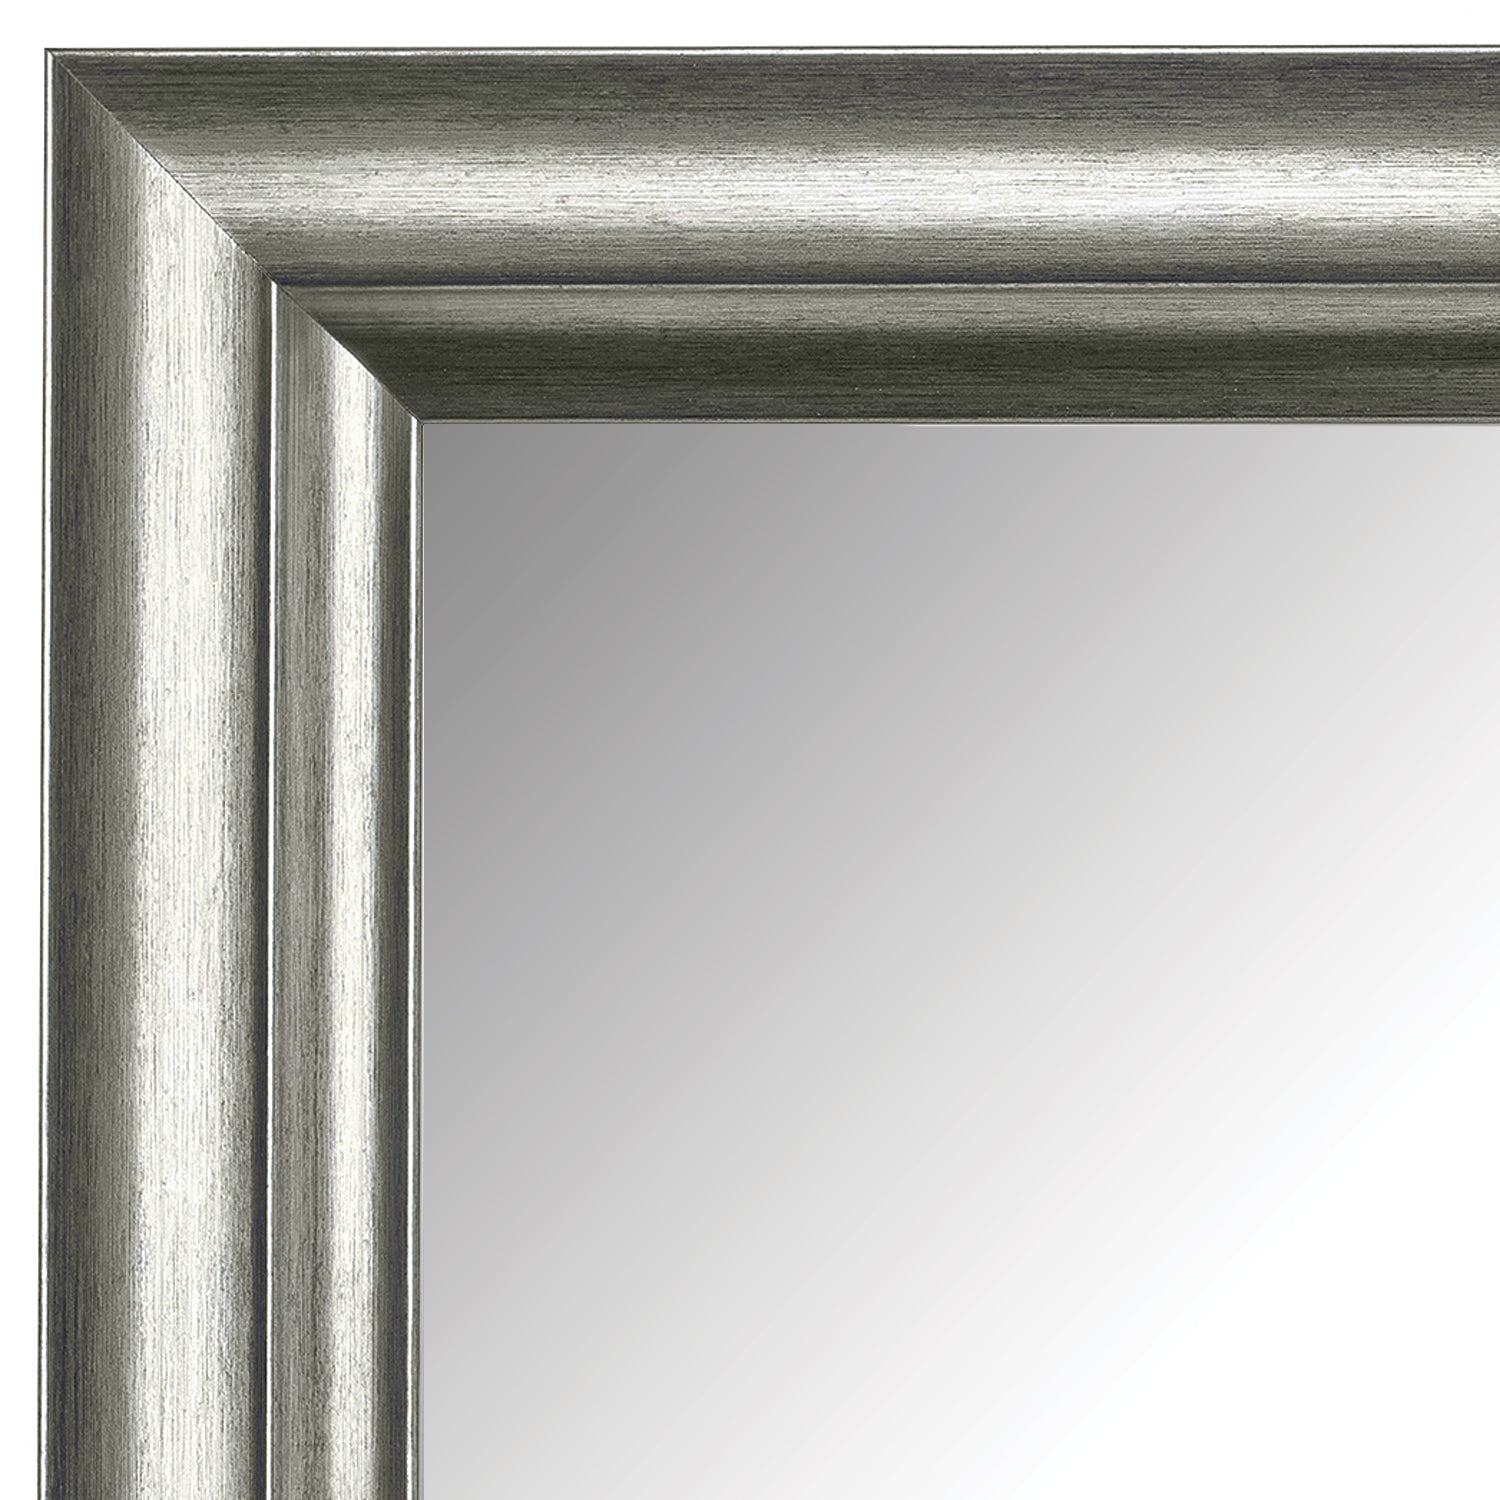 Aged Silver Mirror Frames  Silver Ornate Frames – MirrorMate